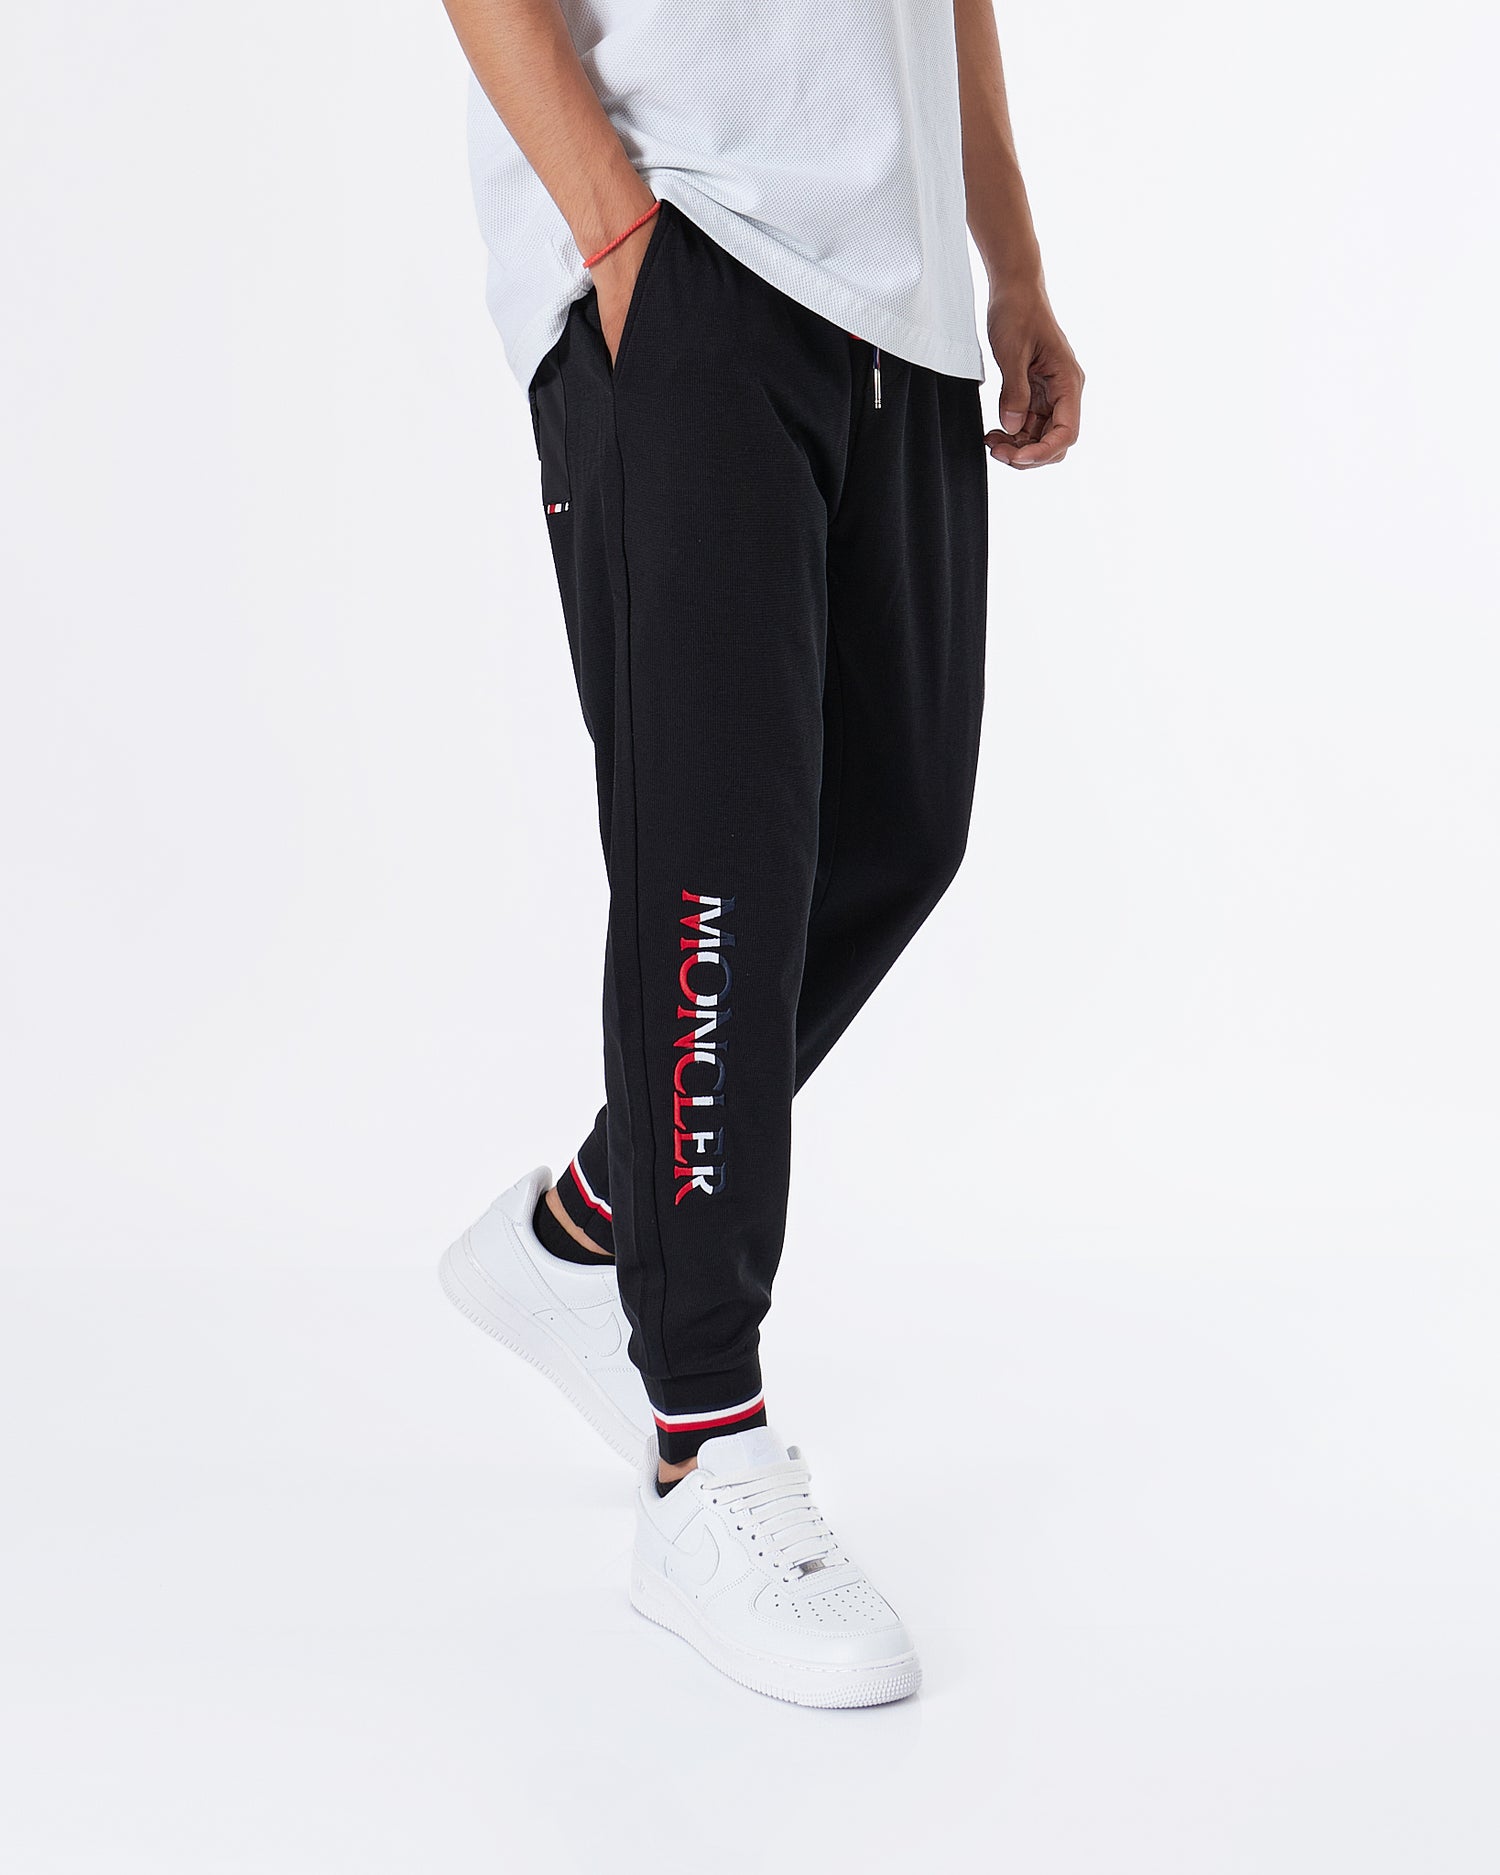 MON Logo Vertical Embroidered Men Black Joggers 68.90